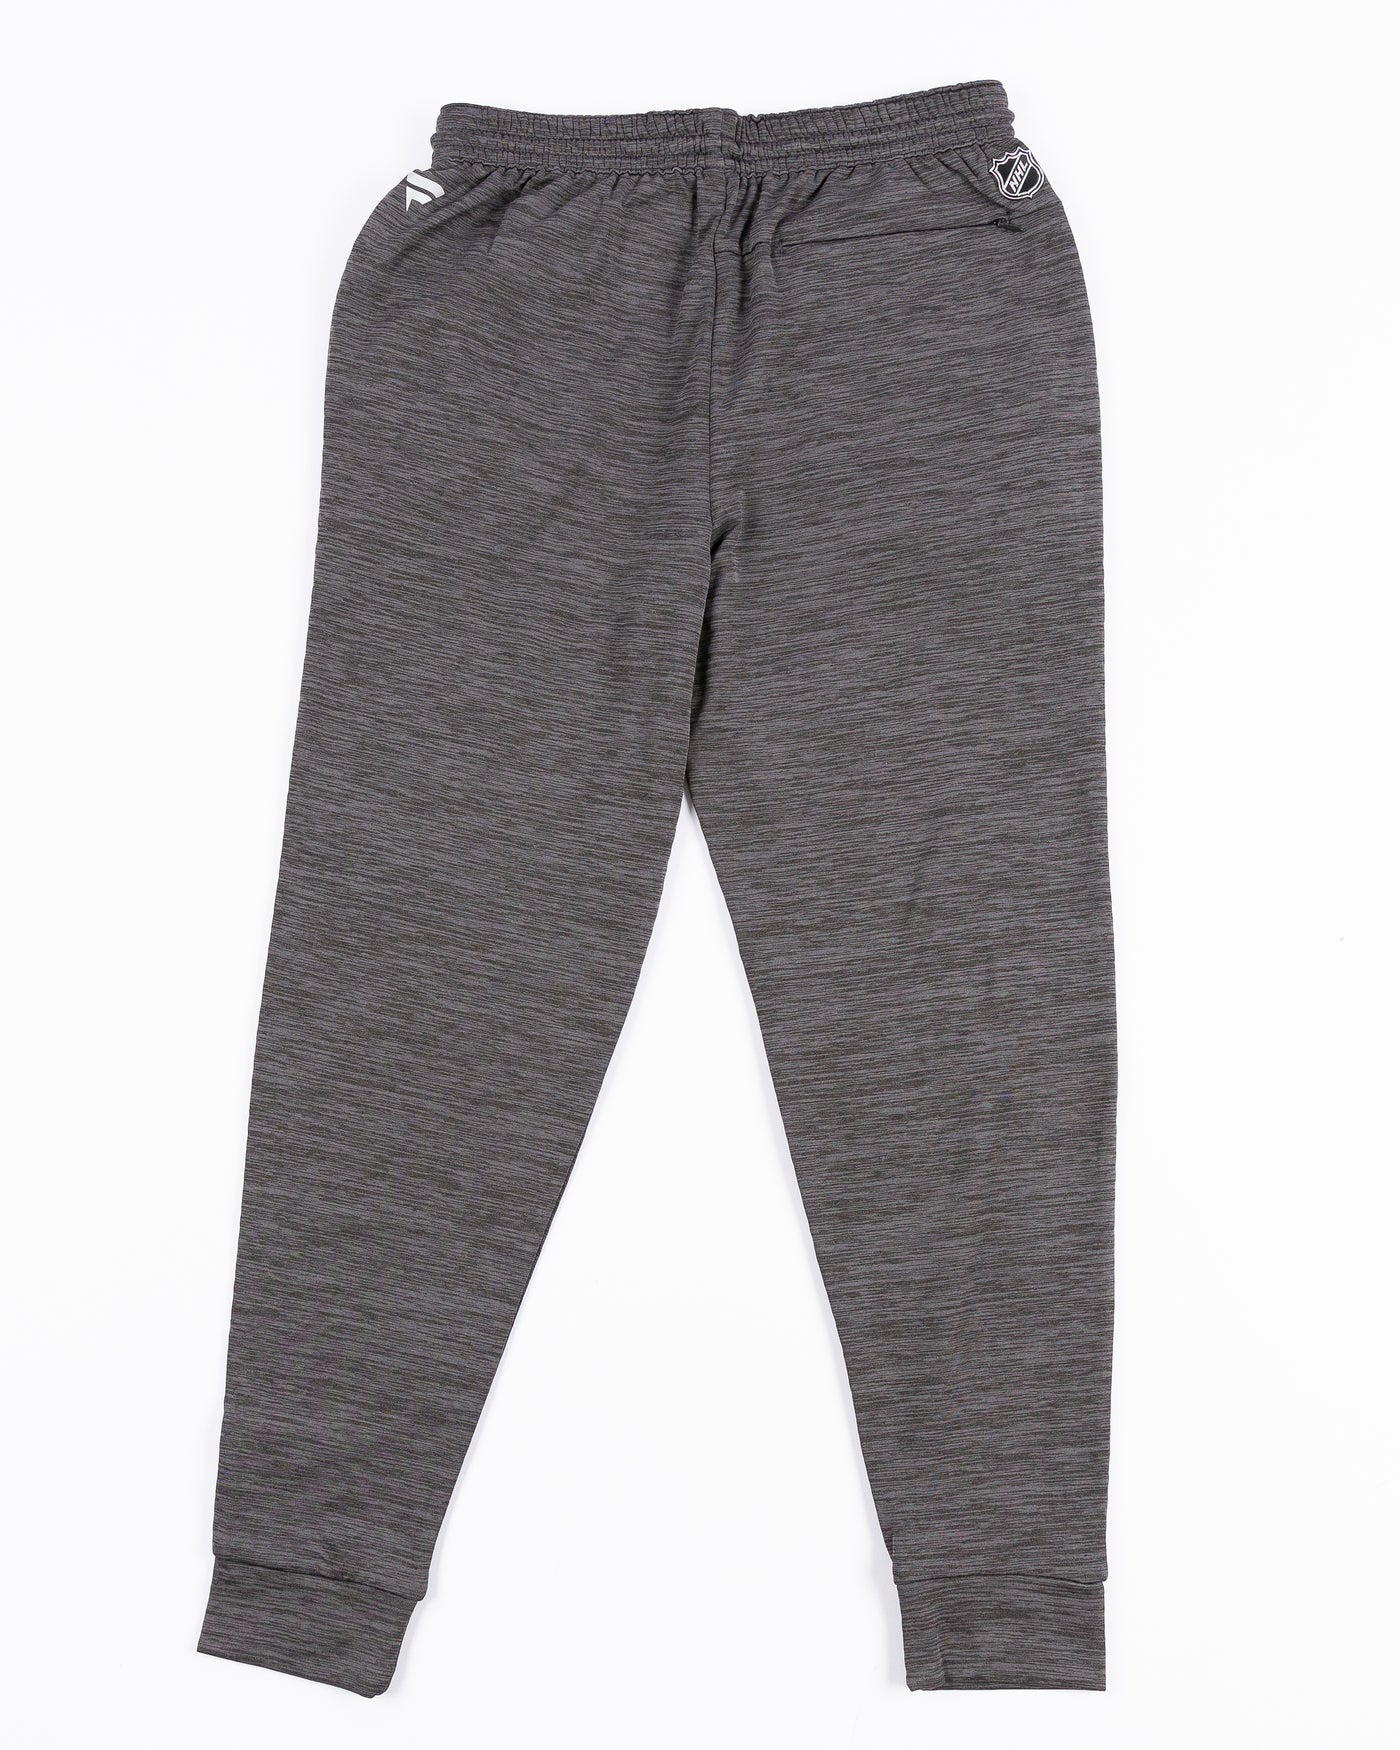 grey Fanatics Authentic Pro jogger sweatpants with tonal Chicago Blackhawks primary logo on left pocket - back lay flat